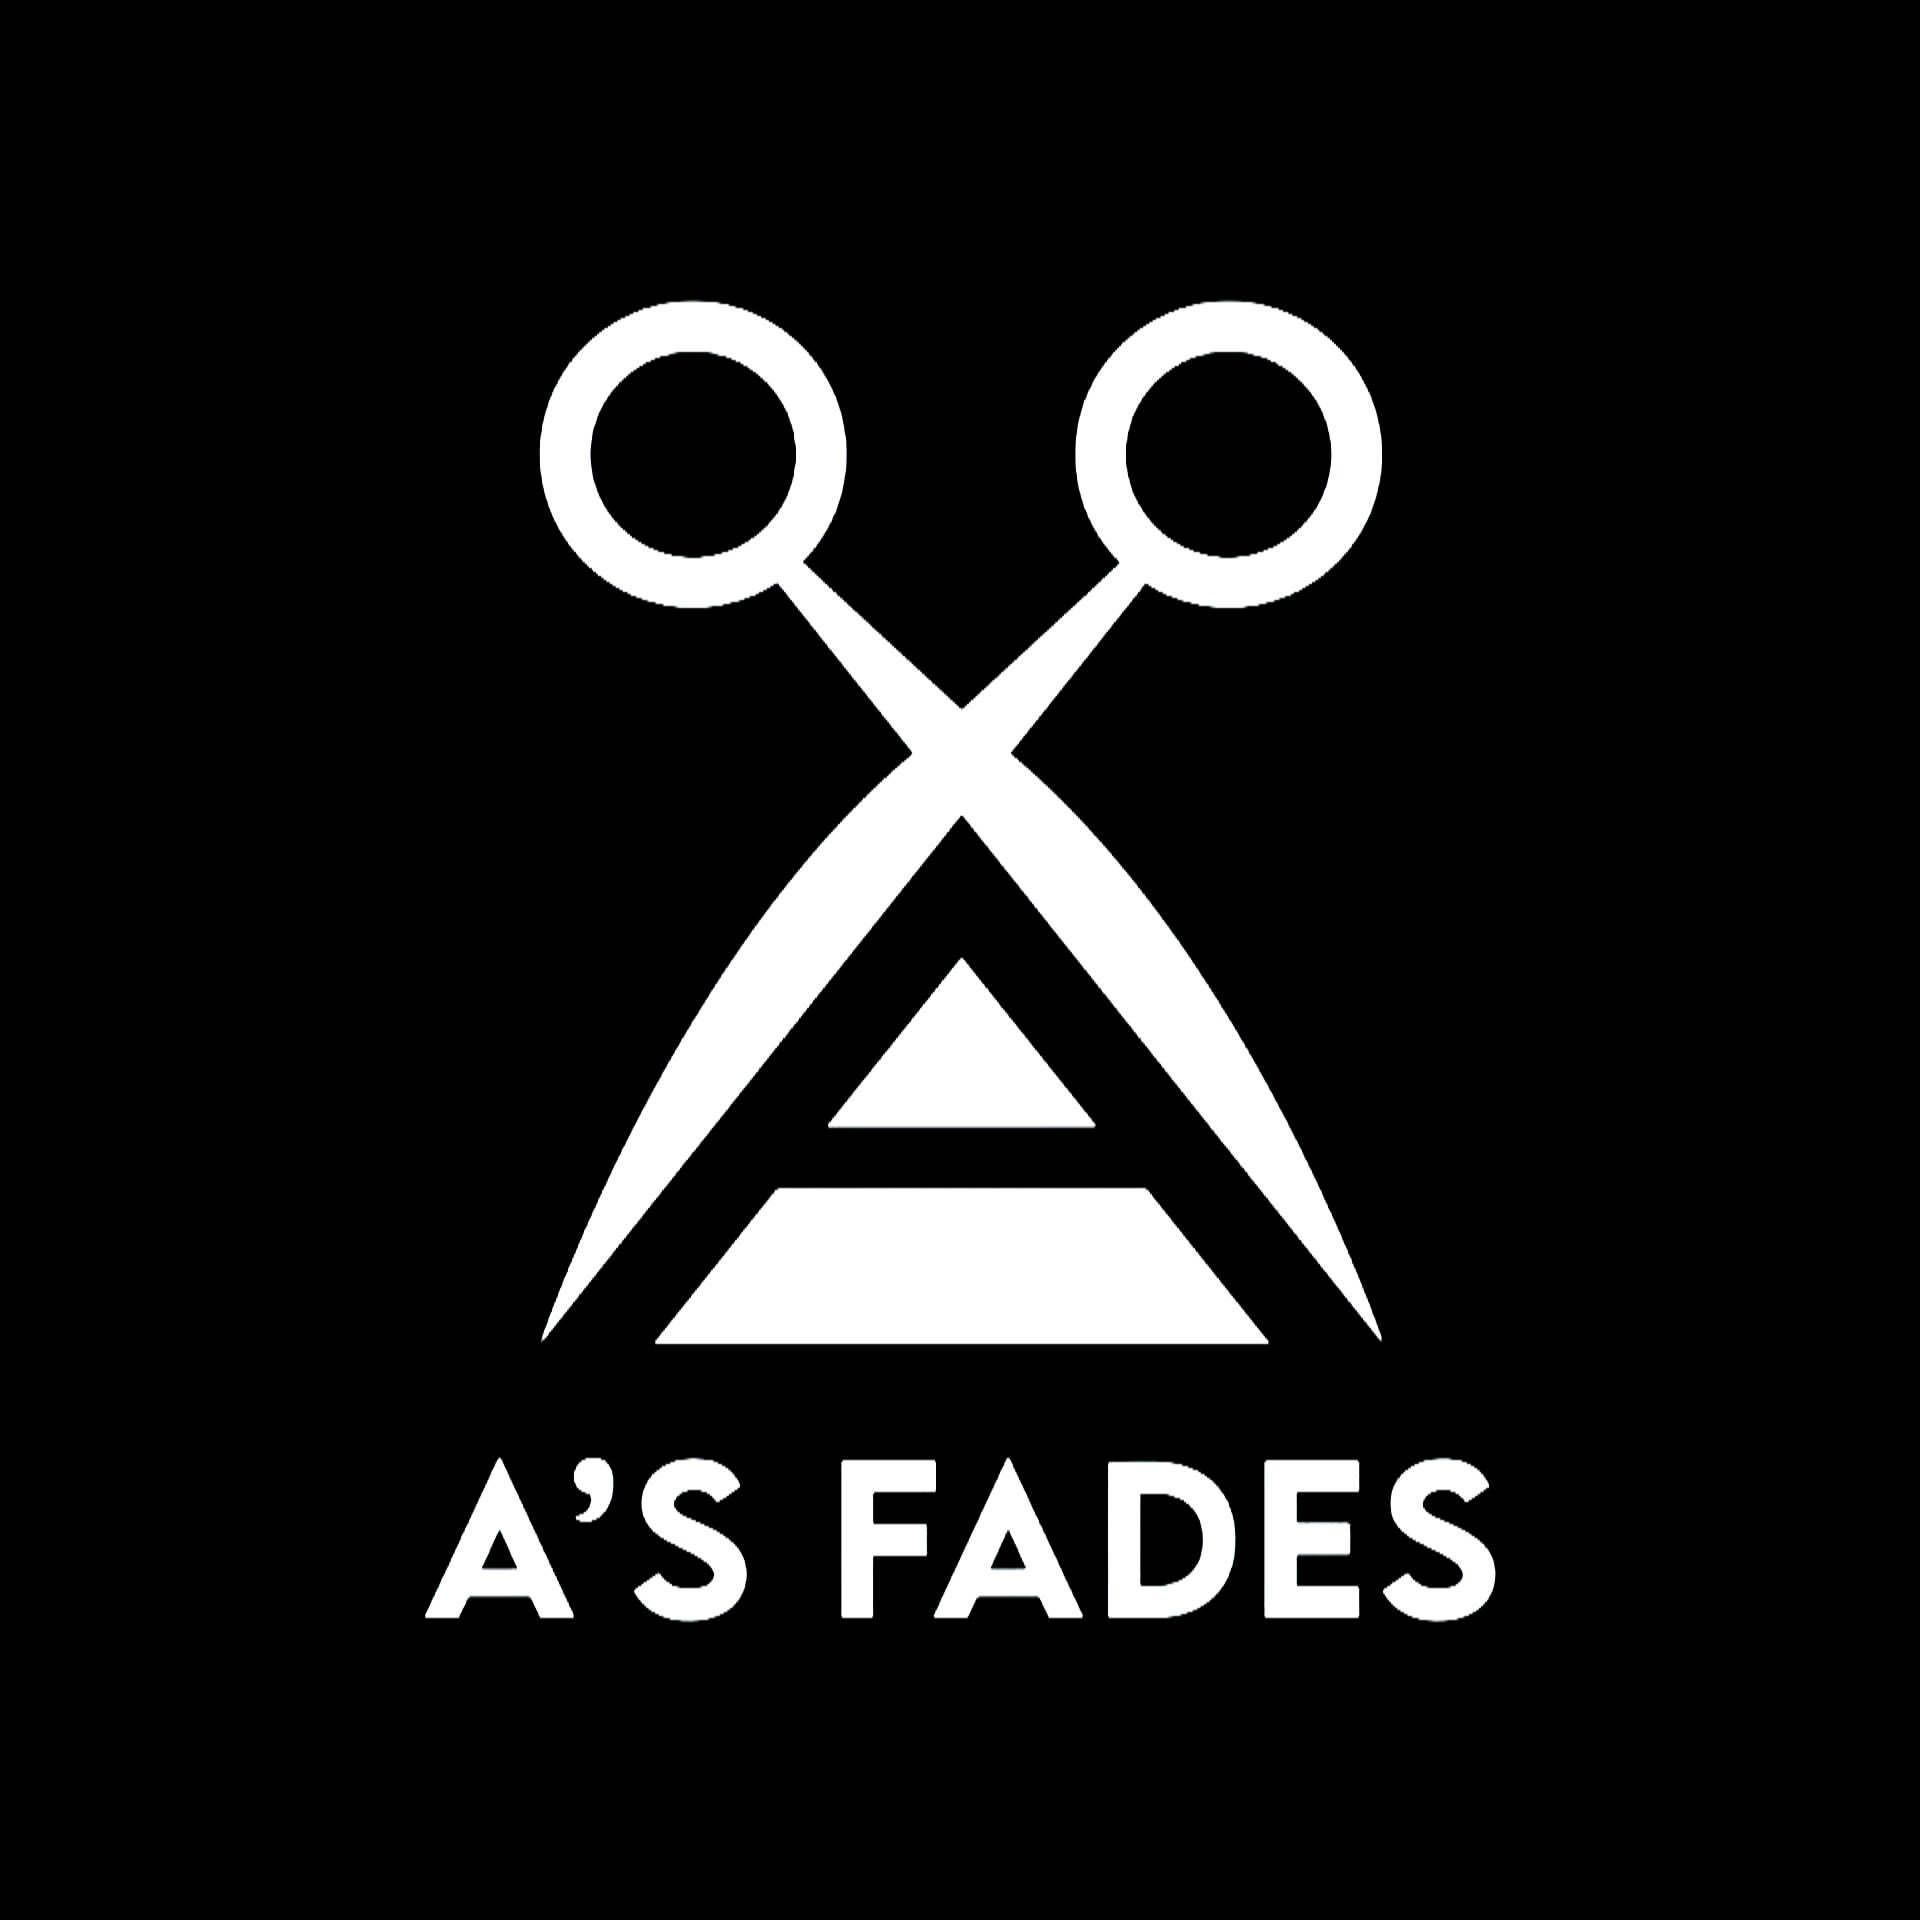 A’s Fades, Wharncliffe Road, BD18 2AD, Shipley